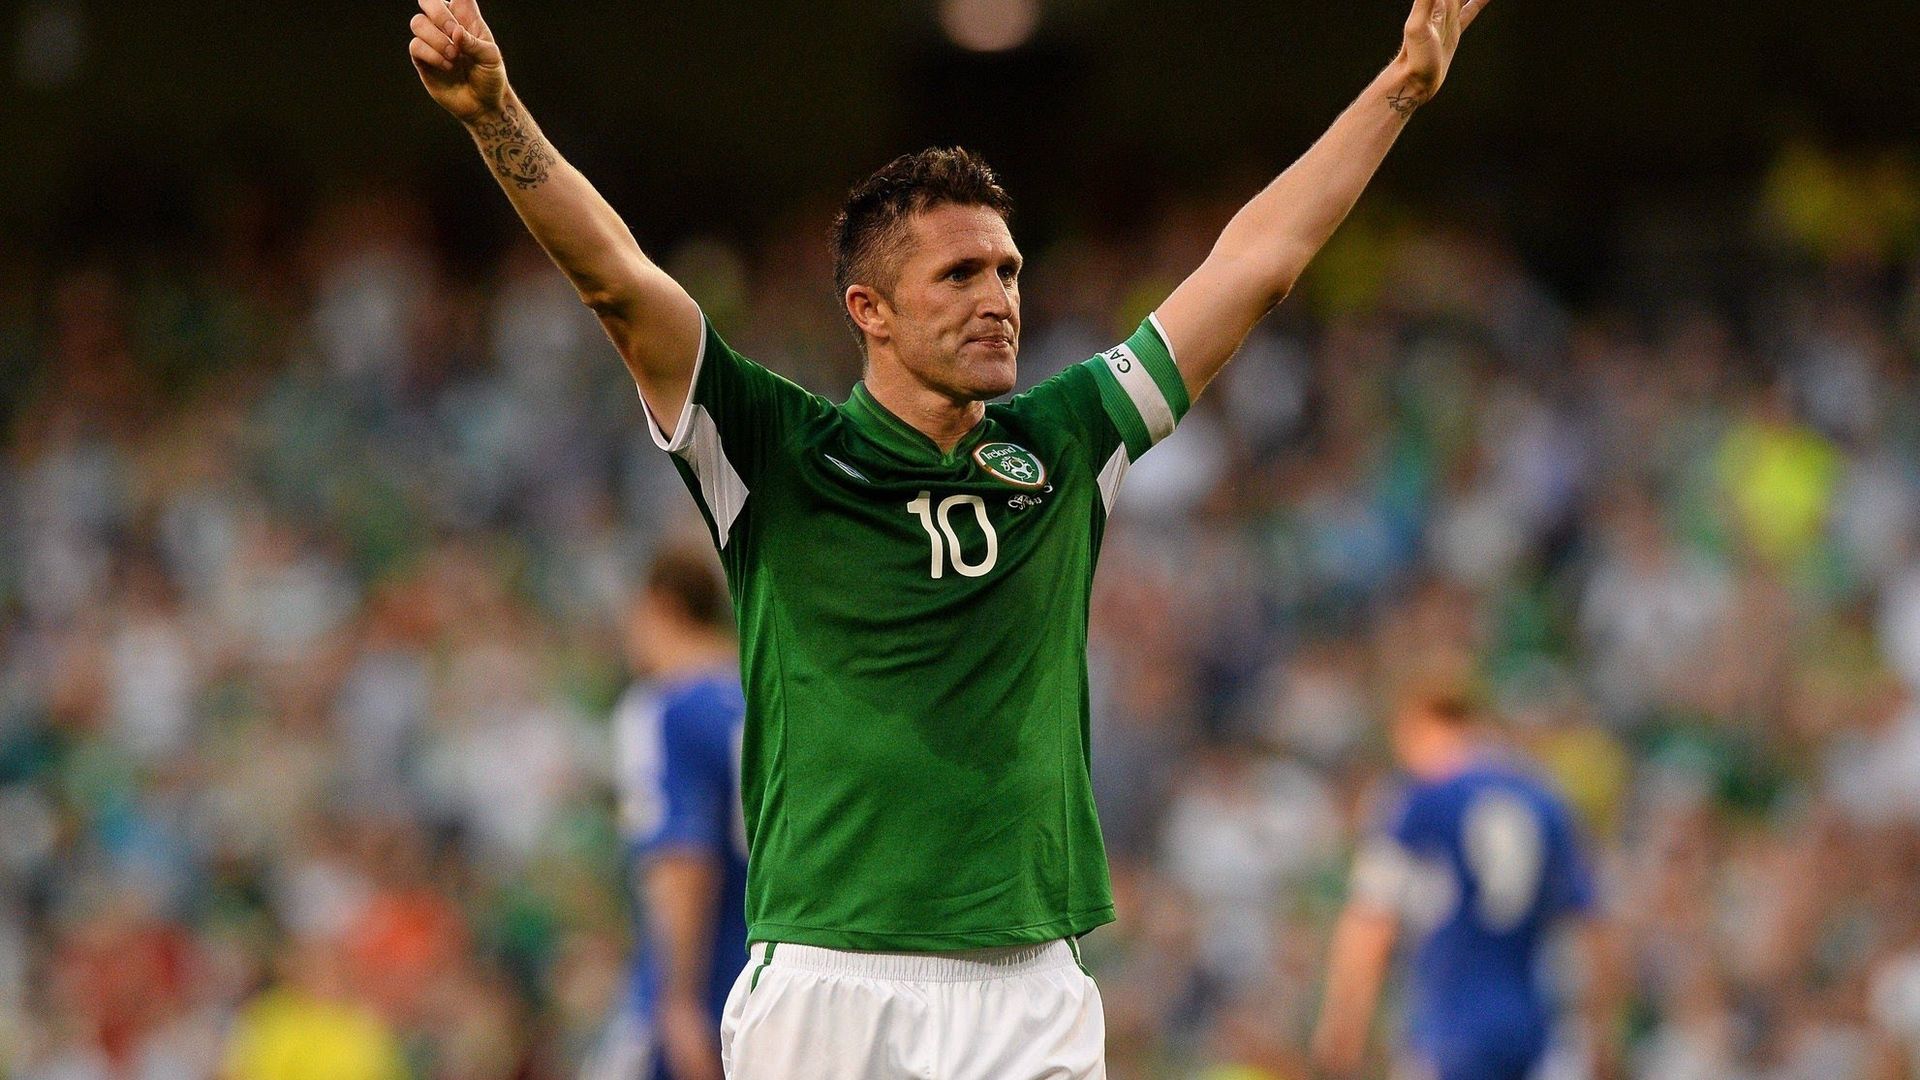 Wallpaper Robbie Keane, Football, La Galaxy Keane Playing For Ireland